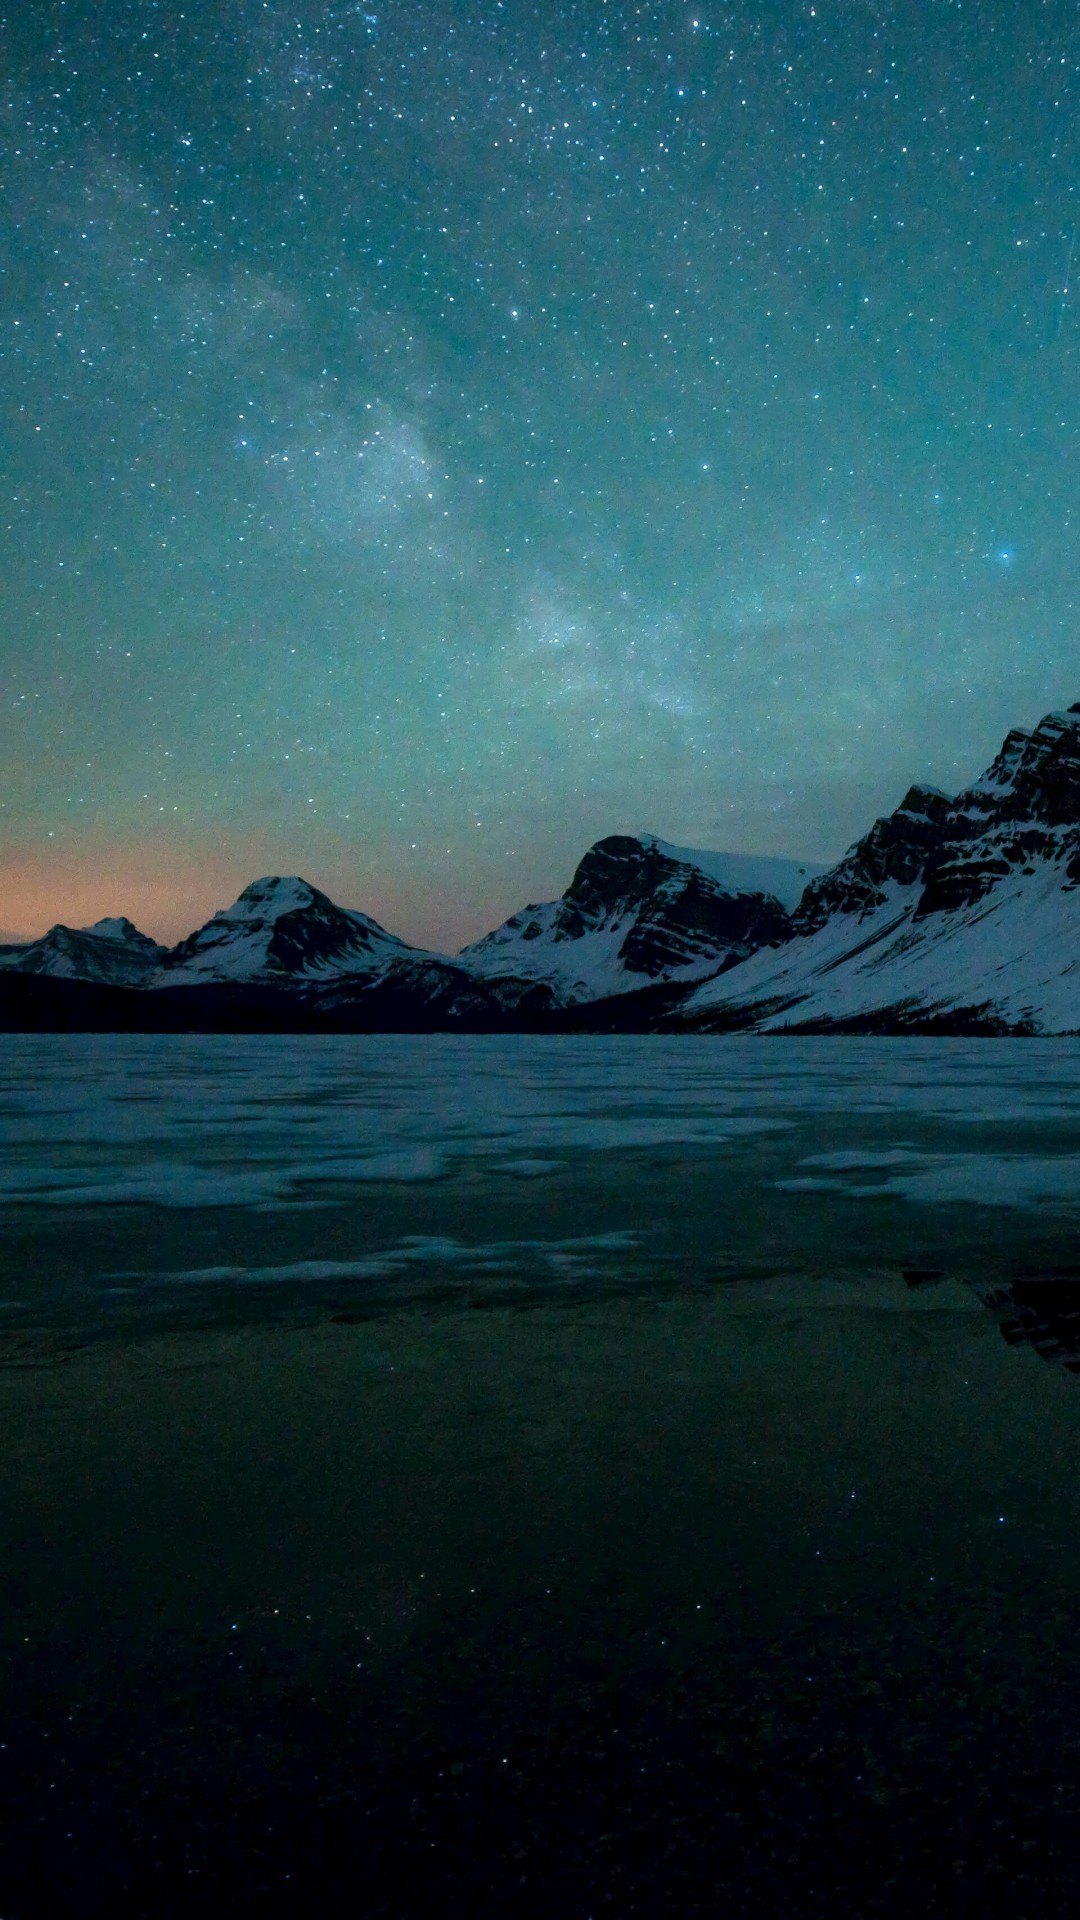 Milky Way over Bow Lake, Alberta, Canada Wallpaper for SONY Xperia Z2